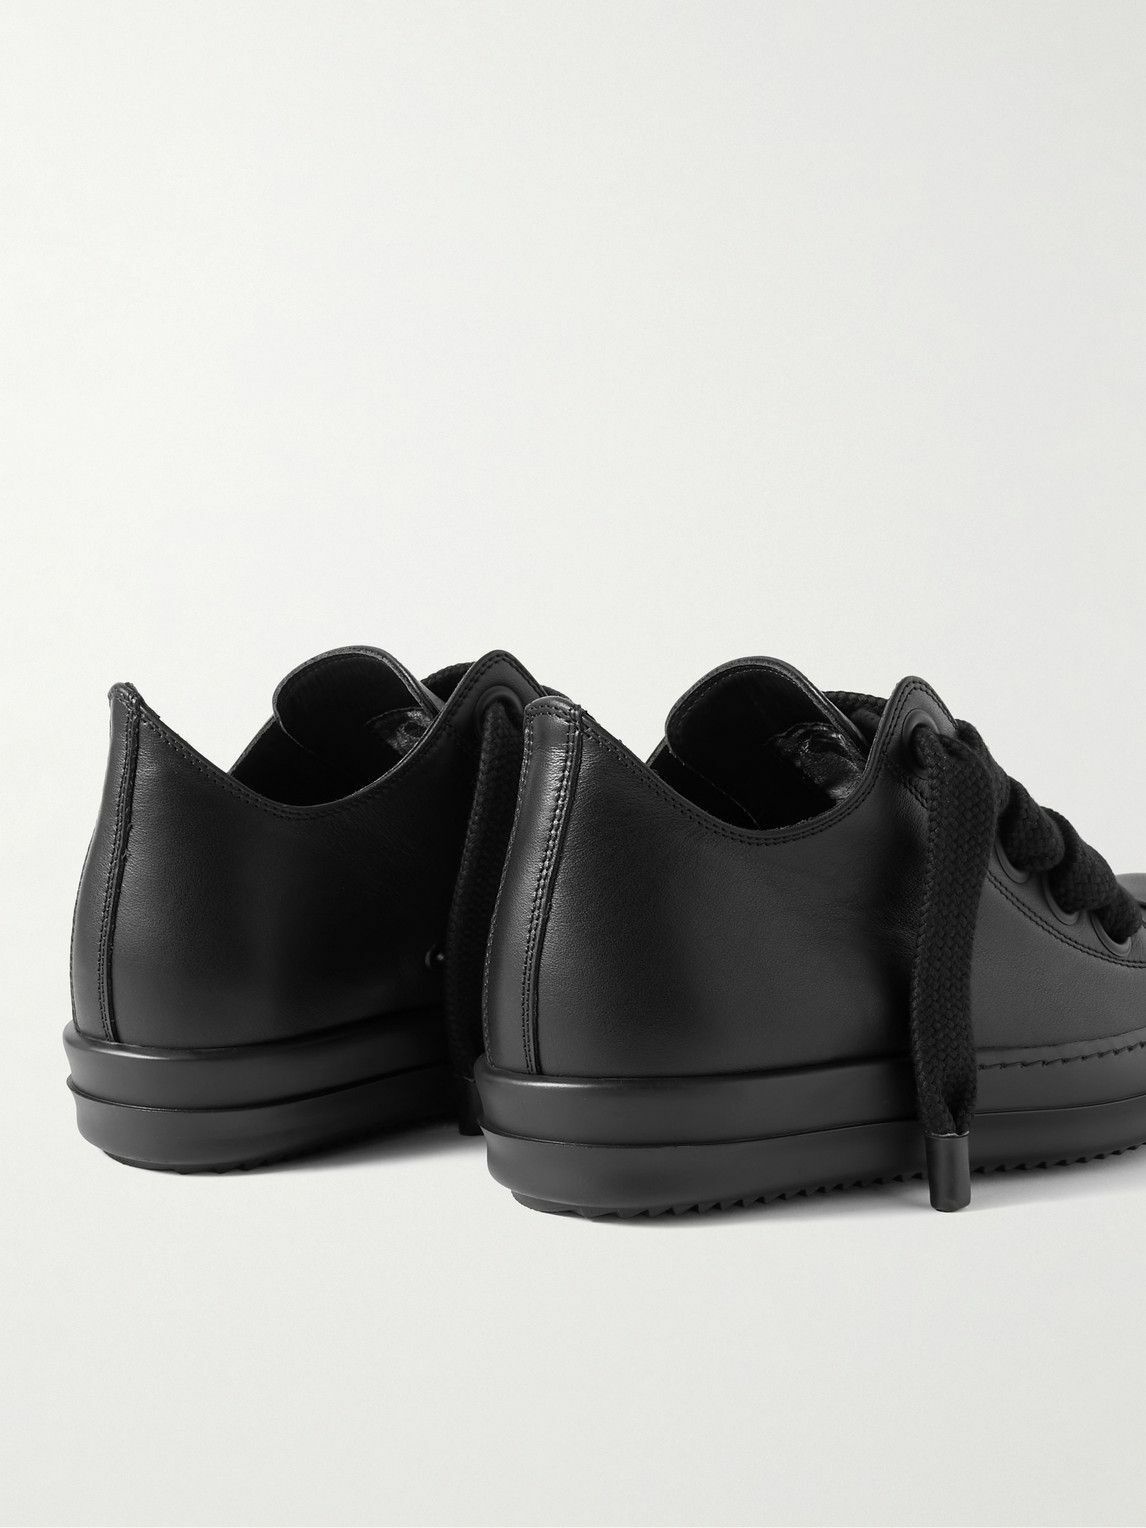 Converse Chuck Taylor All Star Slip on Men/Women Shoes Black Leather  164976C LO | eBay